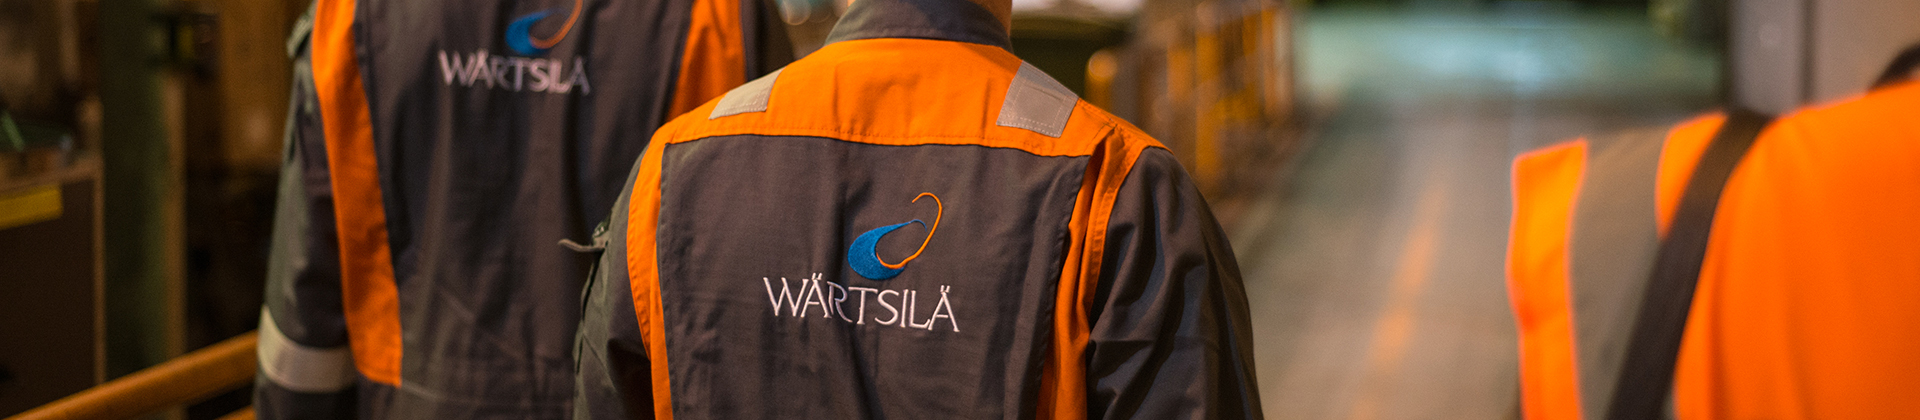 wartsila-seals-bearings-field-service-engineers